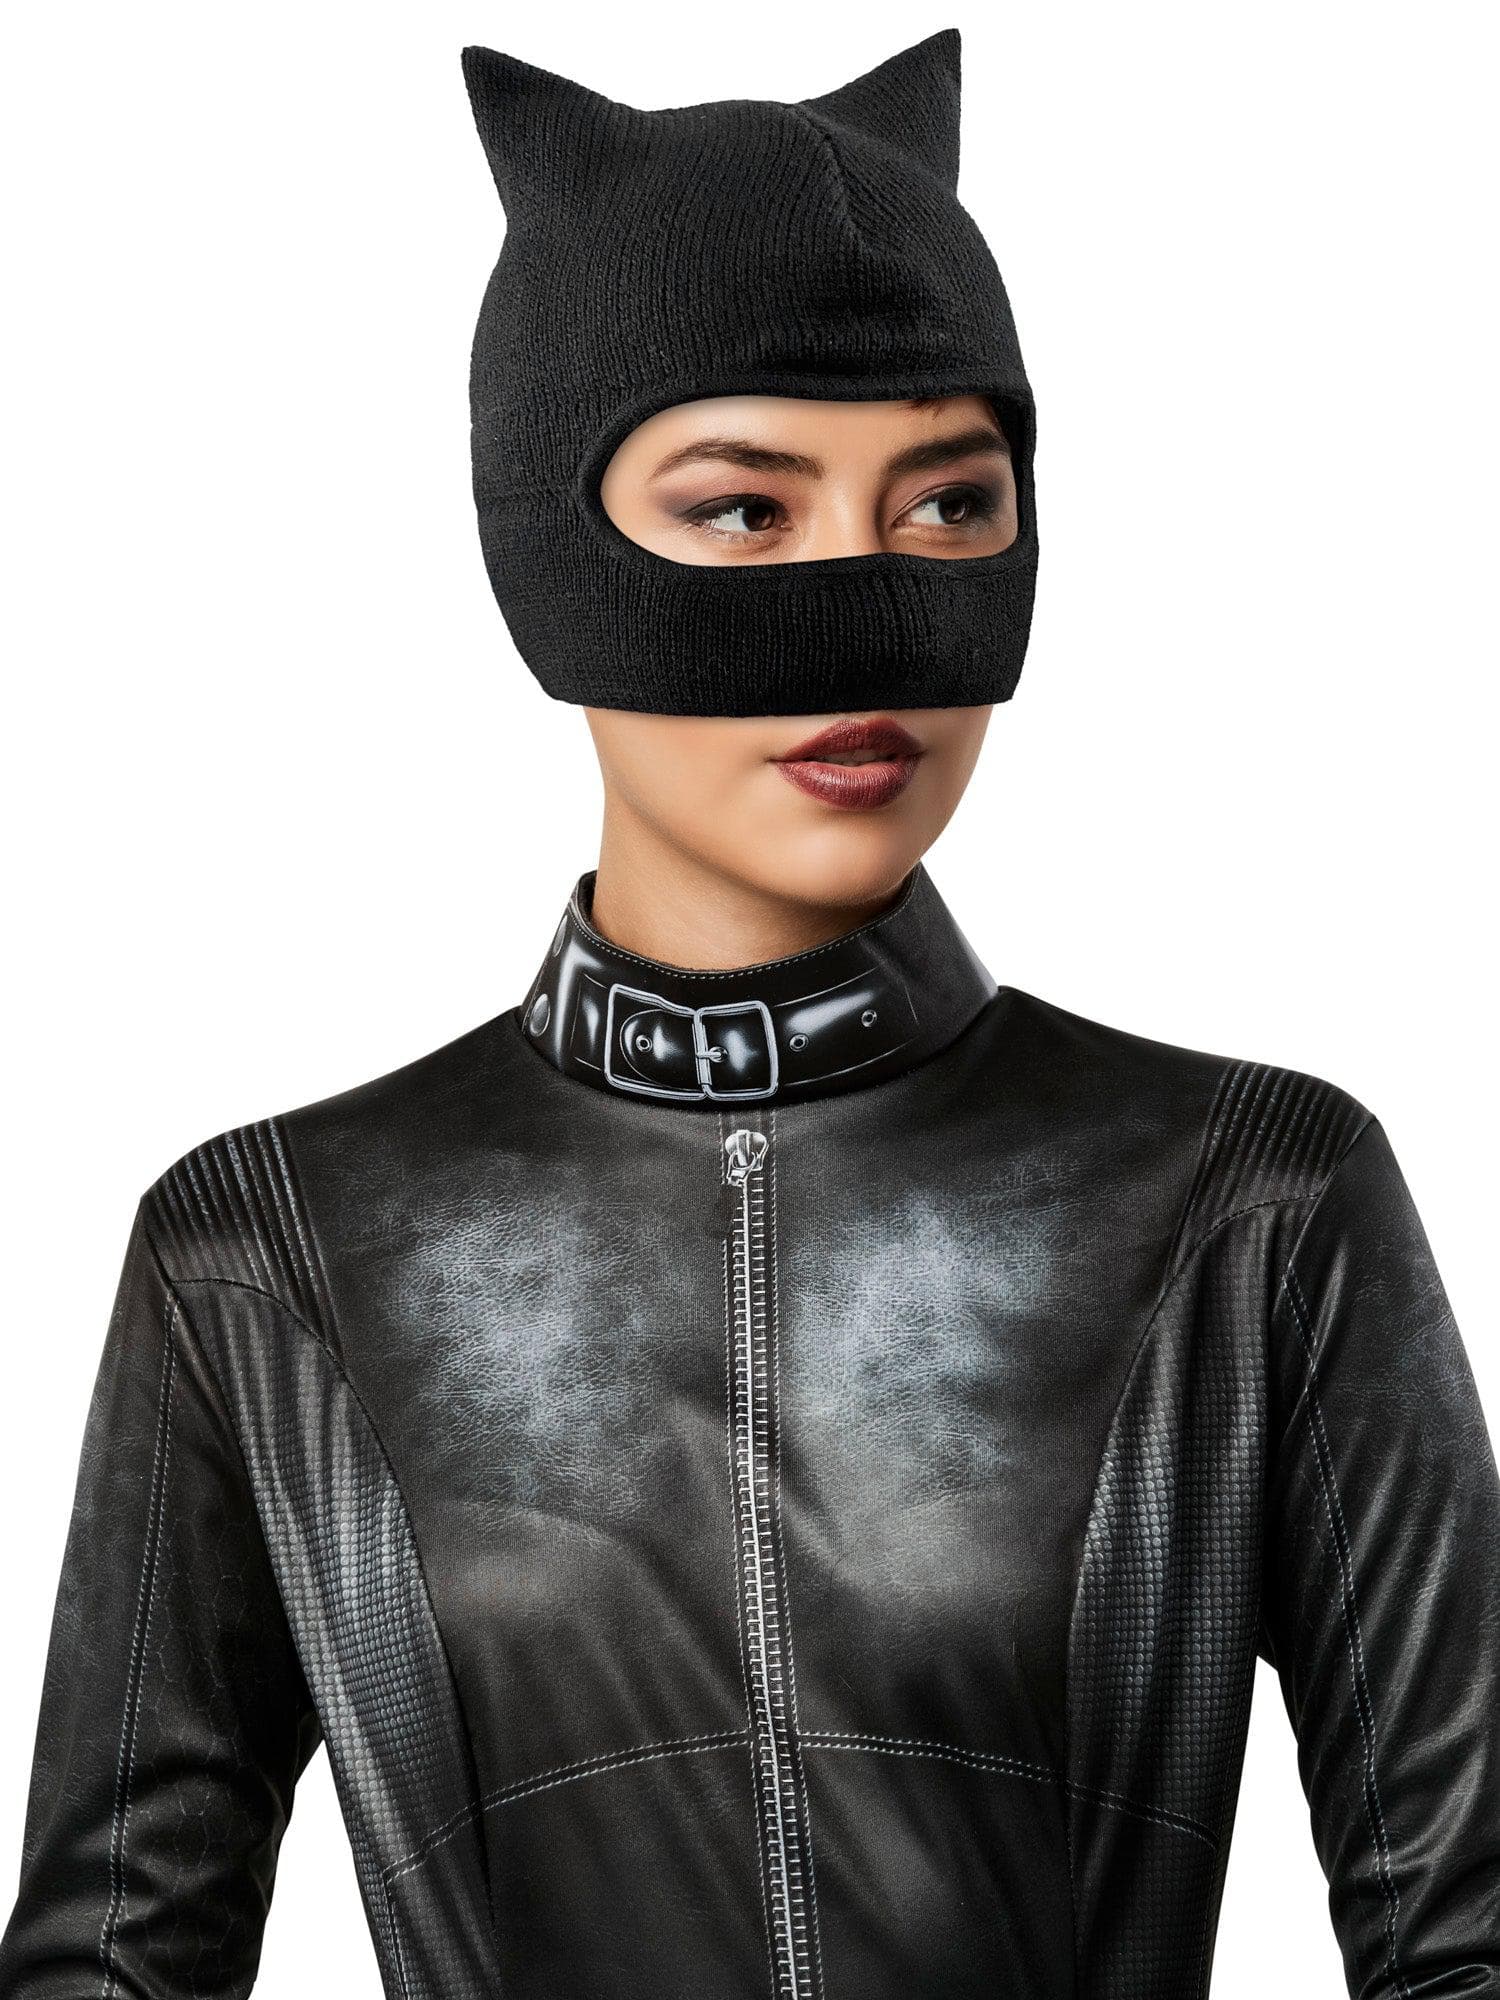 Women's The Batman Selina Kyle Overhead Mask - costumes.com